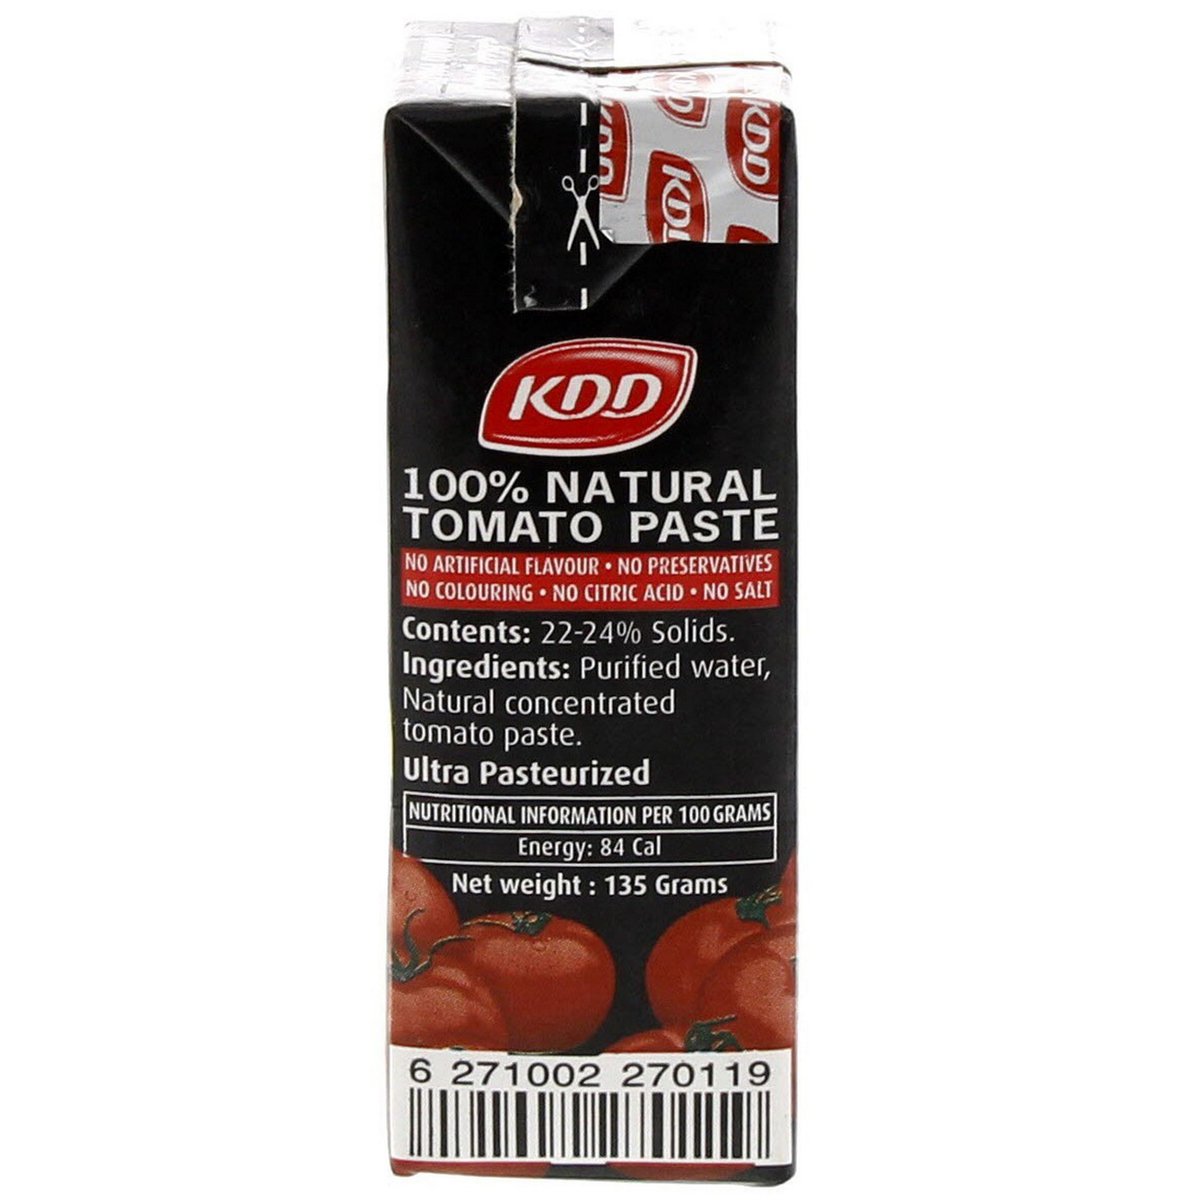 KDD Tomato Paste 8 x 135 g